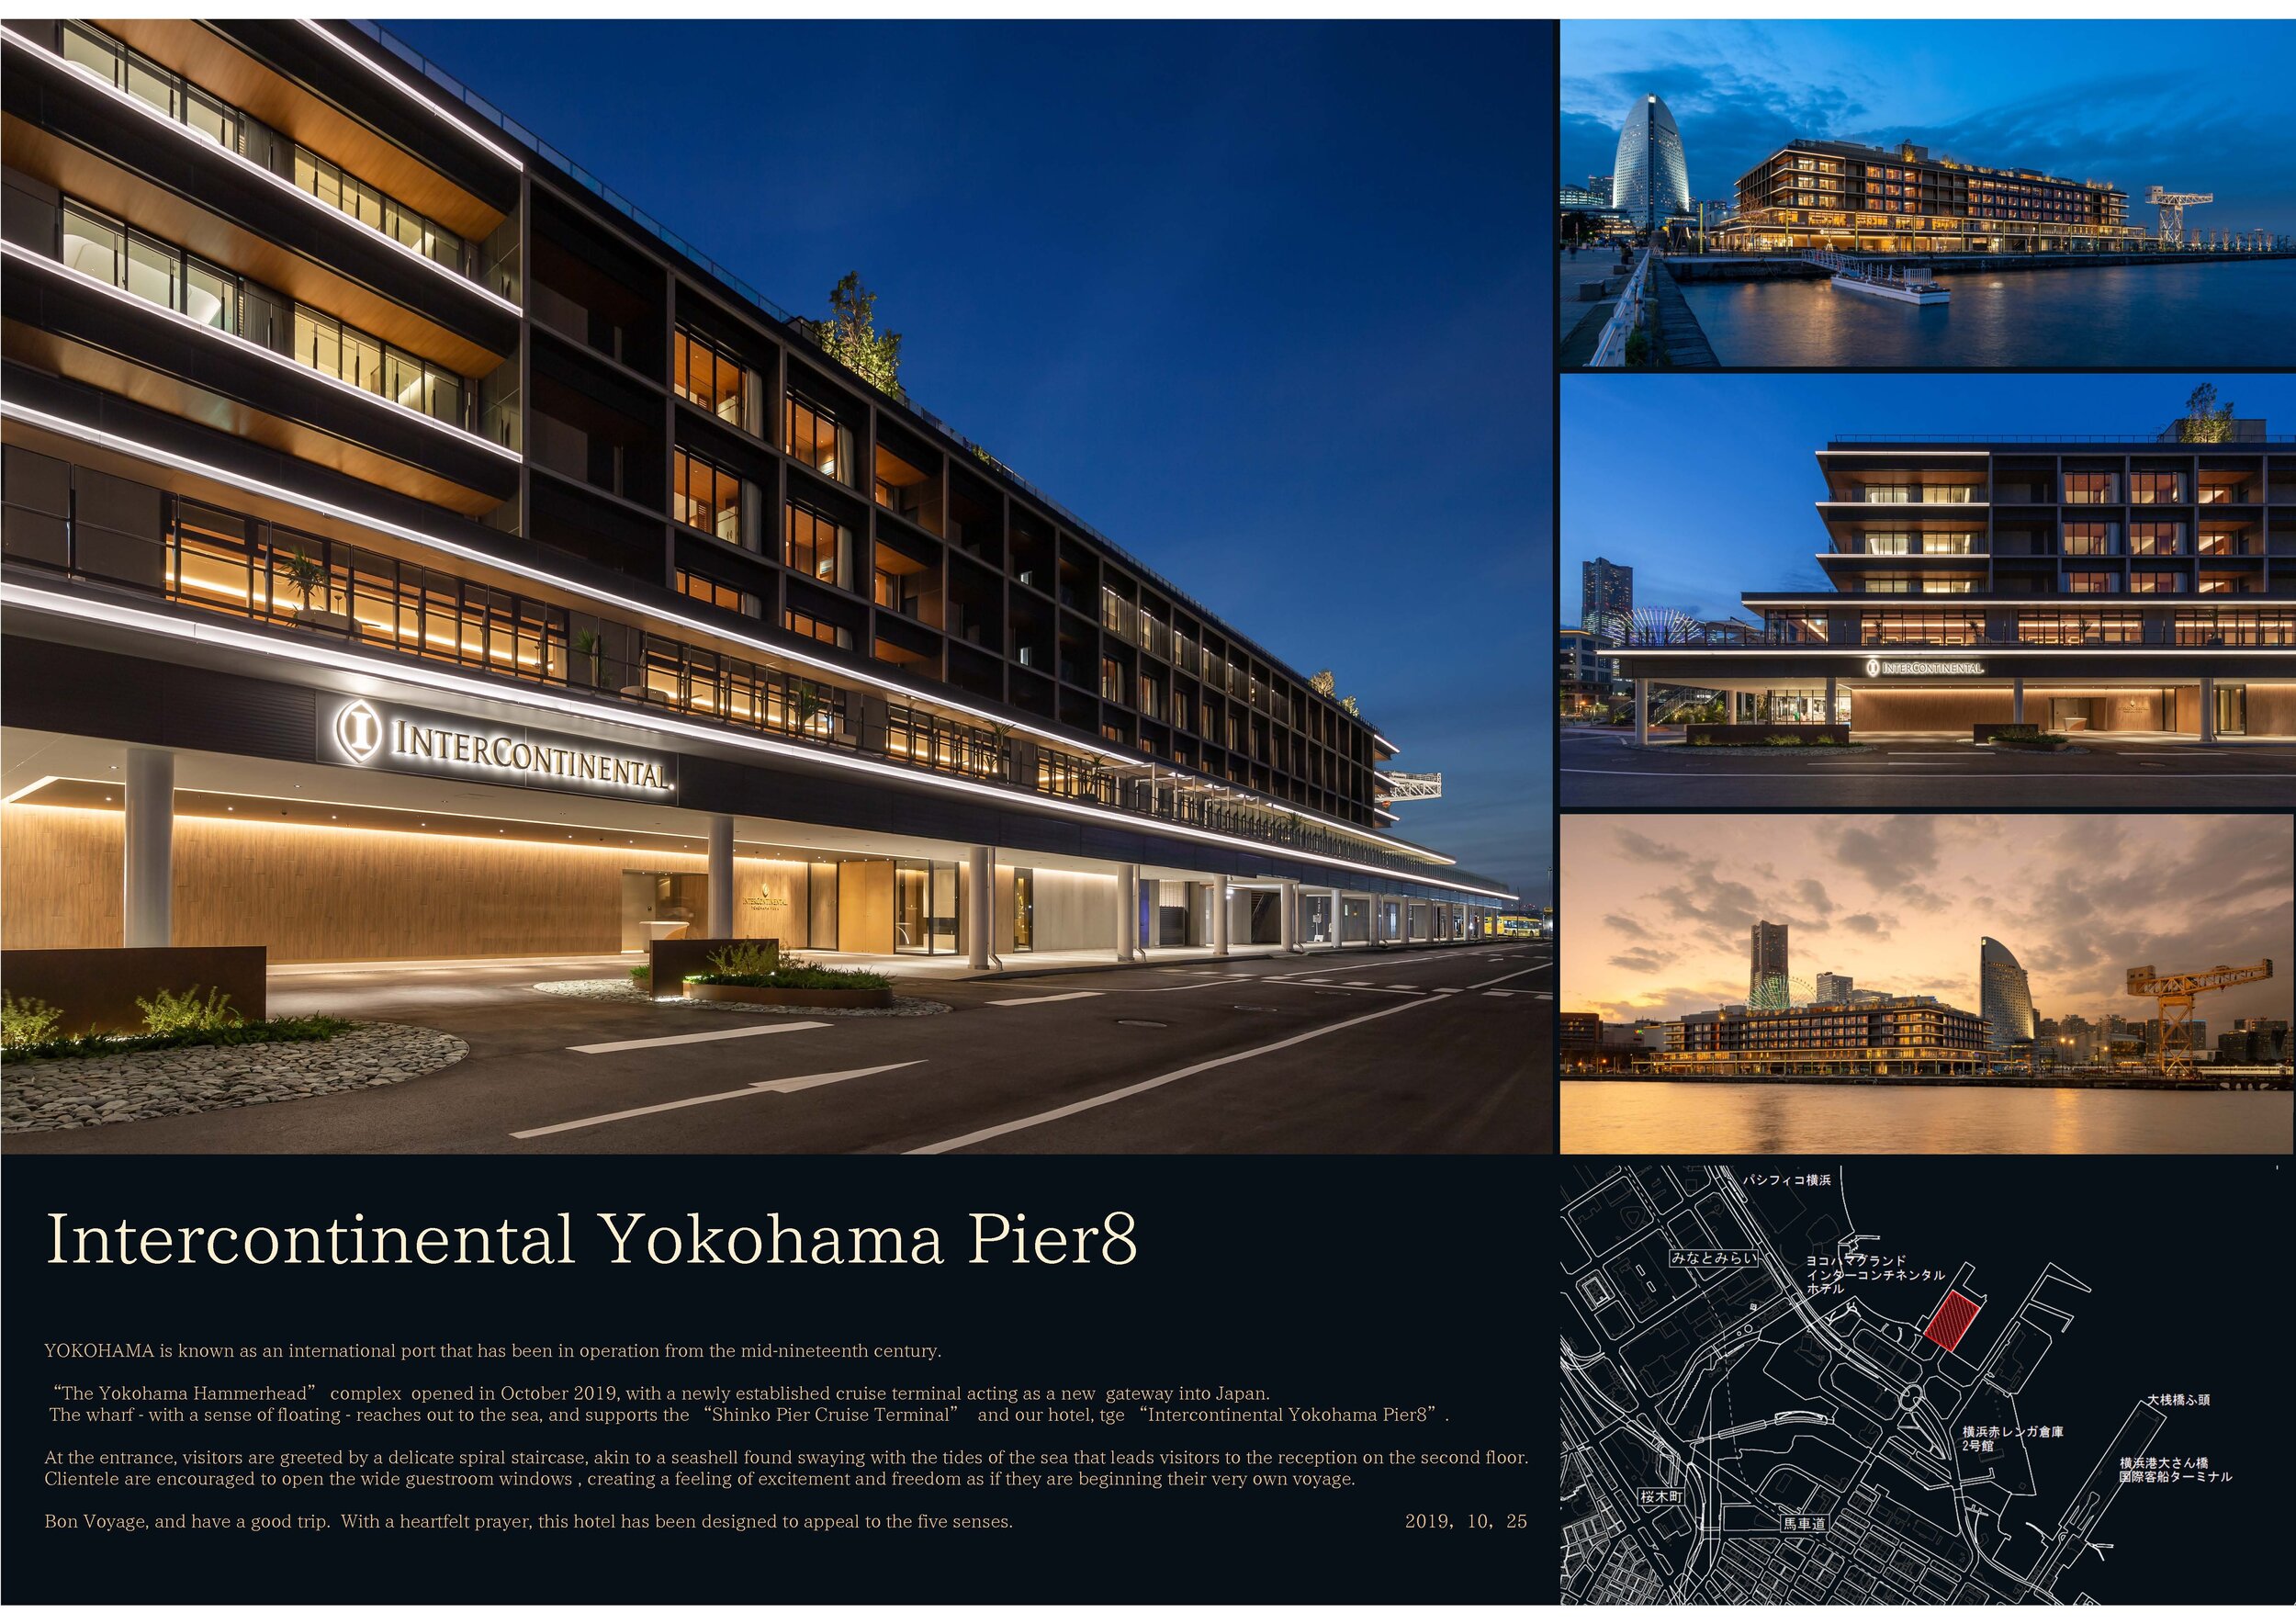 Intercontinental Yokohama Pier8_summary_Page_01.jpg